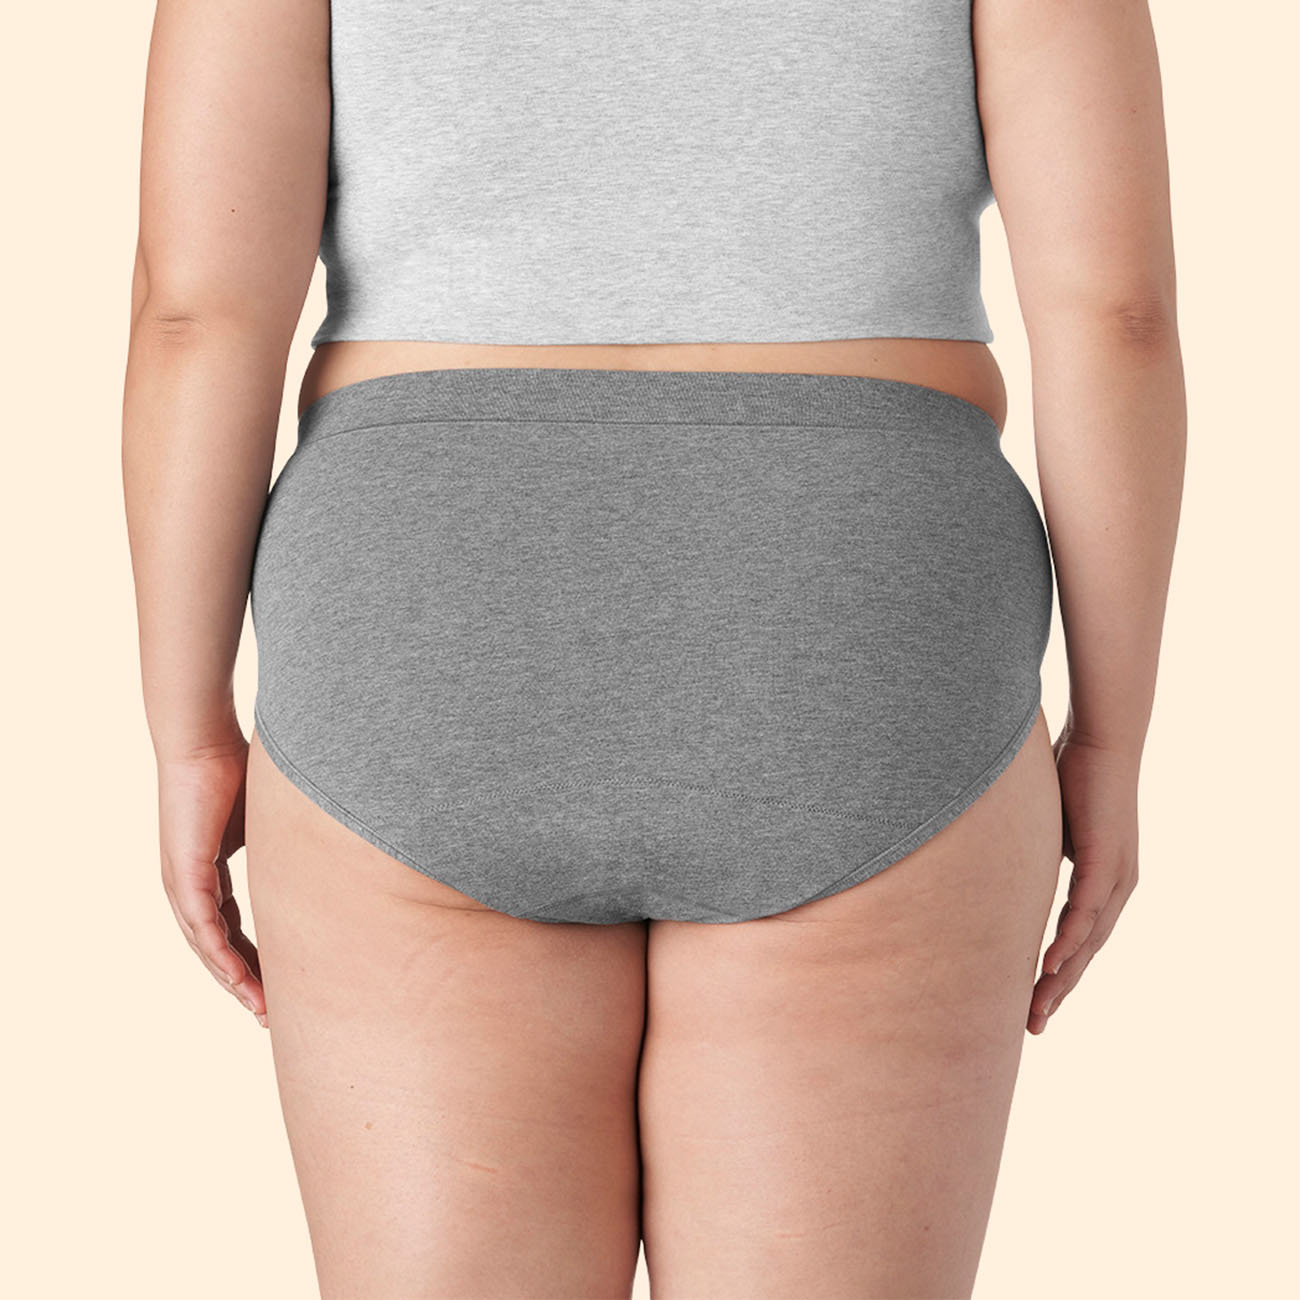 OVTICZA Period Underwear for Women Plus Size Low Rise Cotton